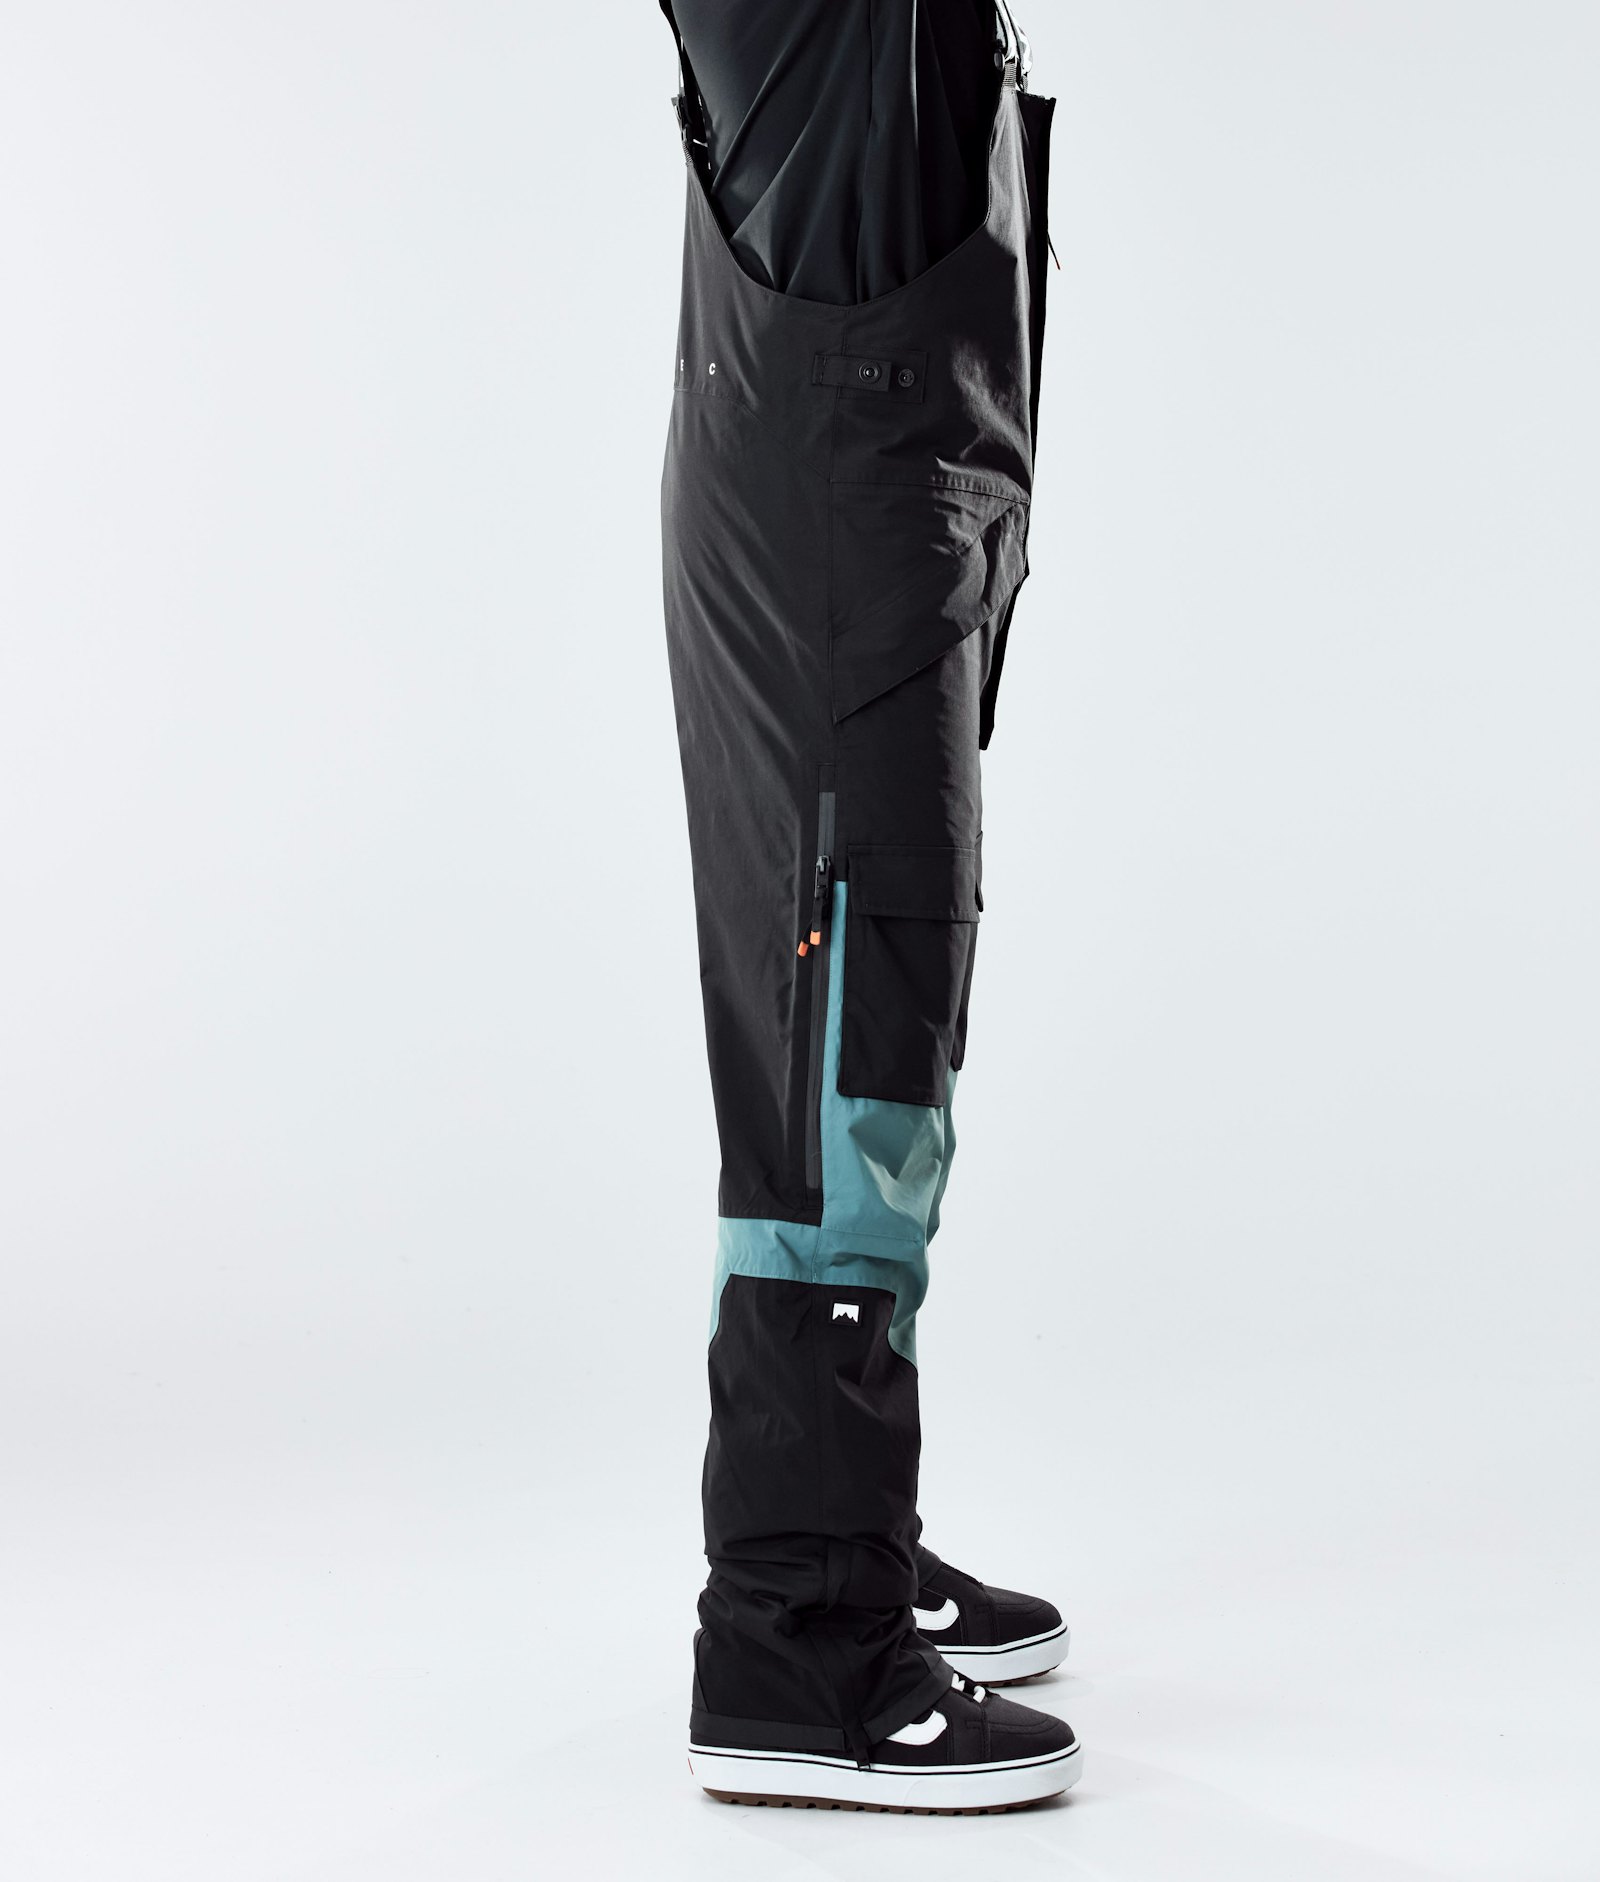 Fawk 2020 Snowboard Pants Men Black/Atlantic Renewed